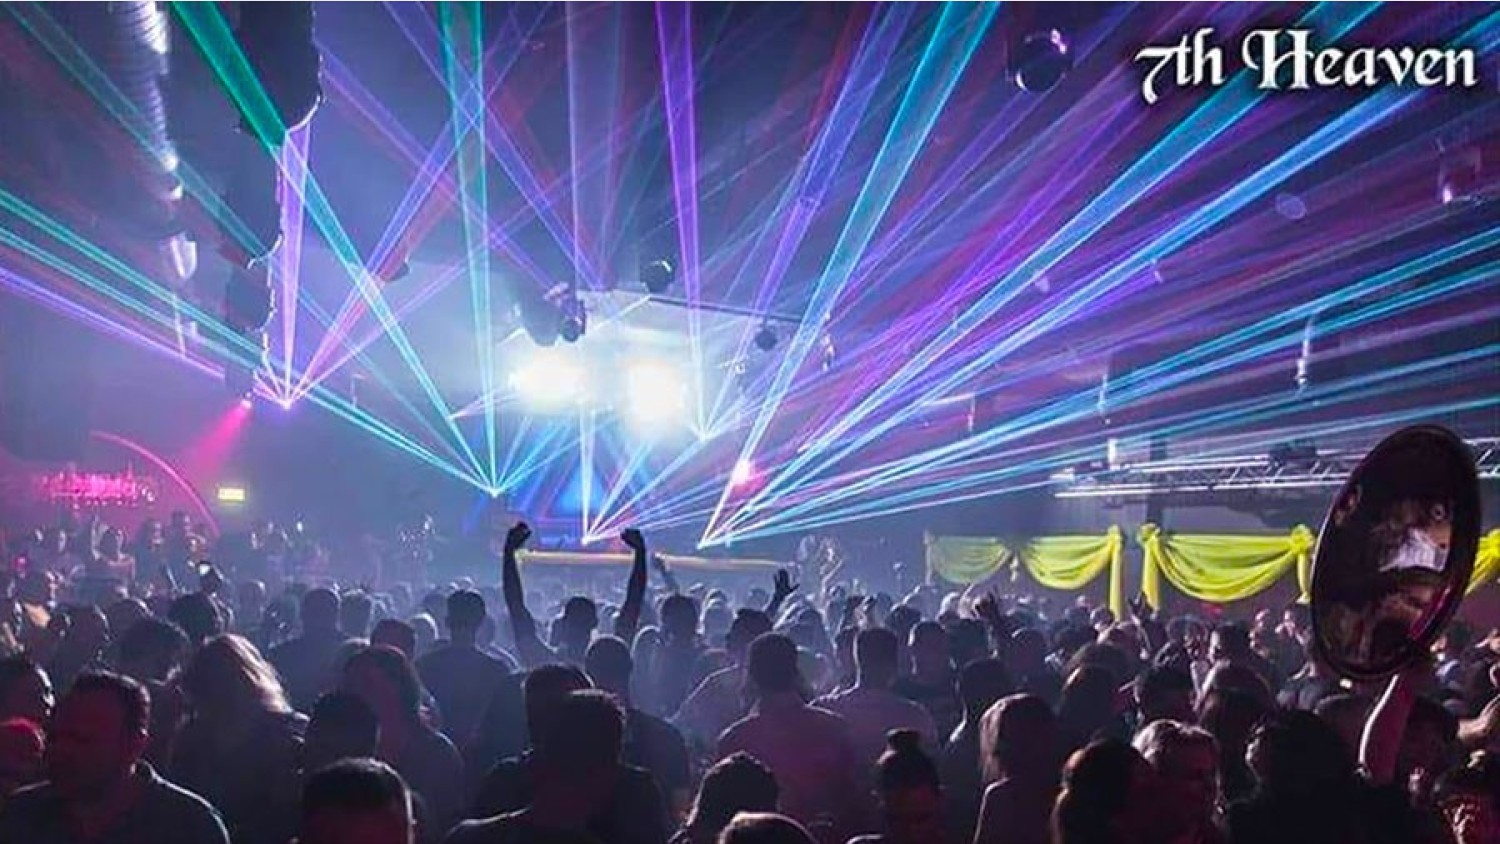 Party nieuws: 7th Heaven is terug in Club Rodenburg met Grand Opening